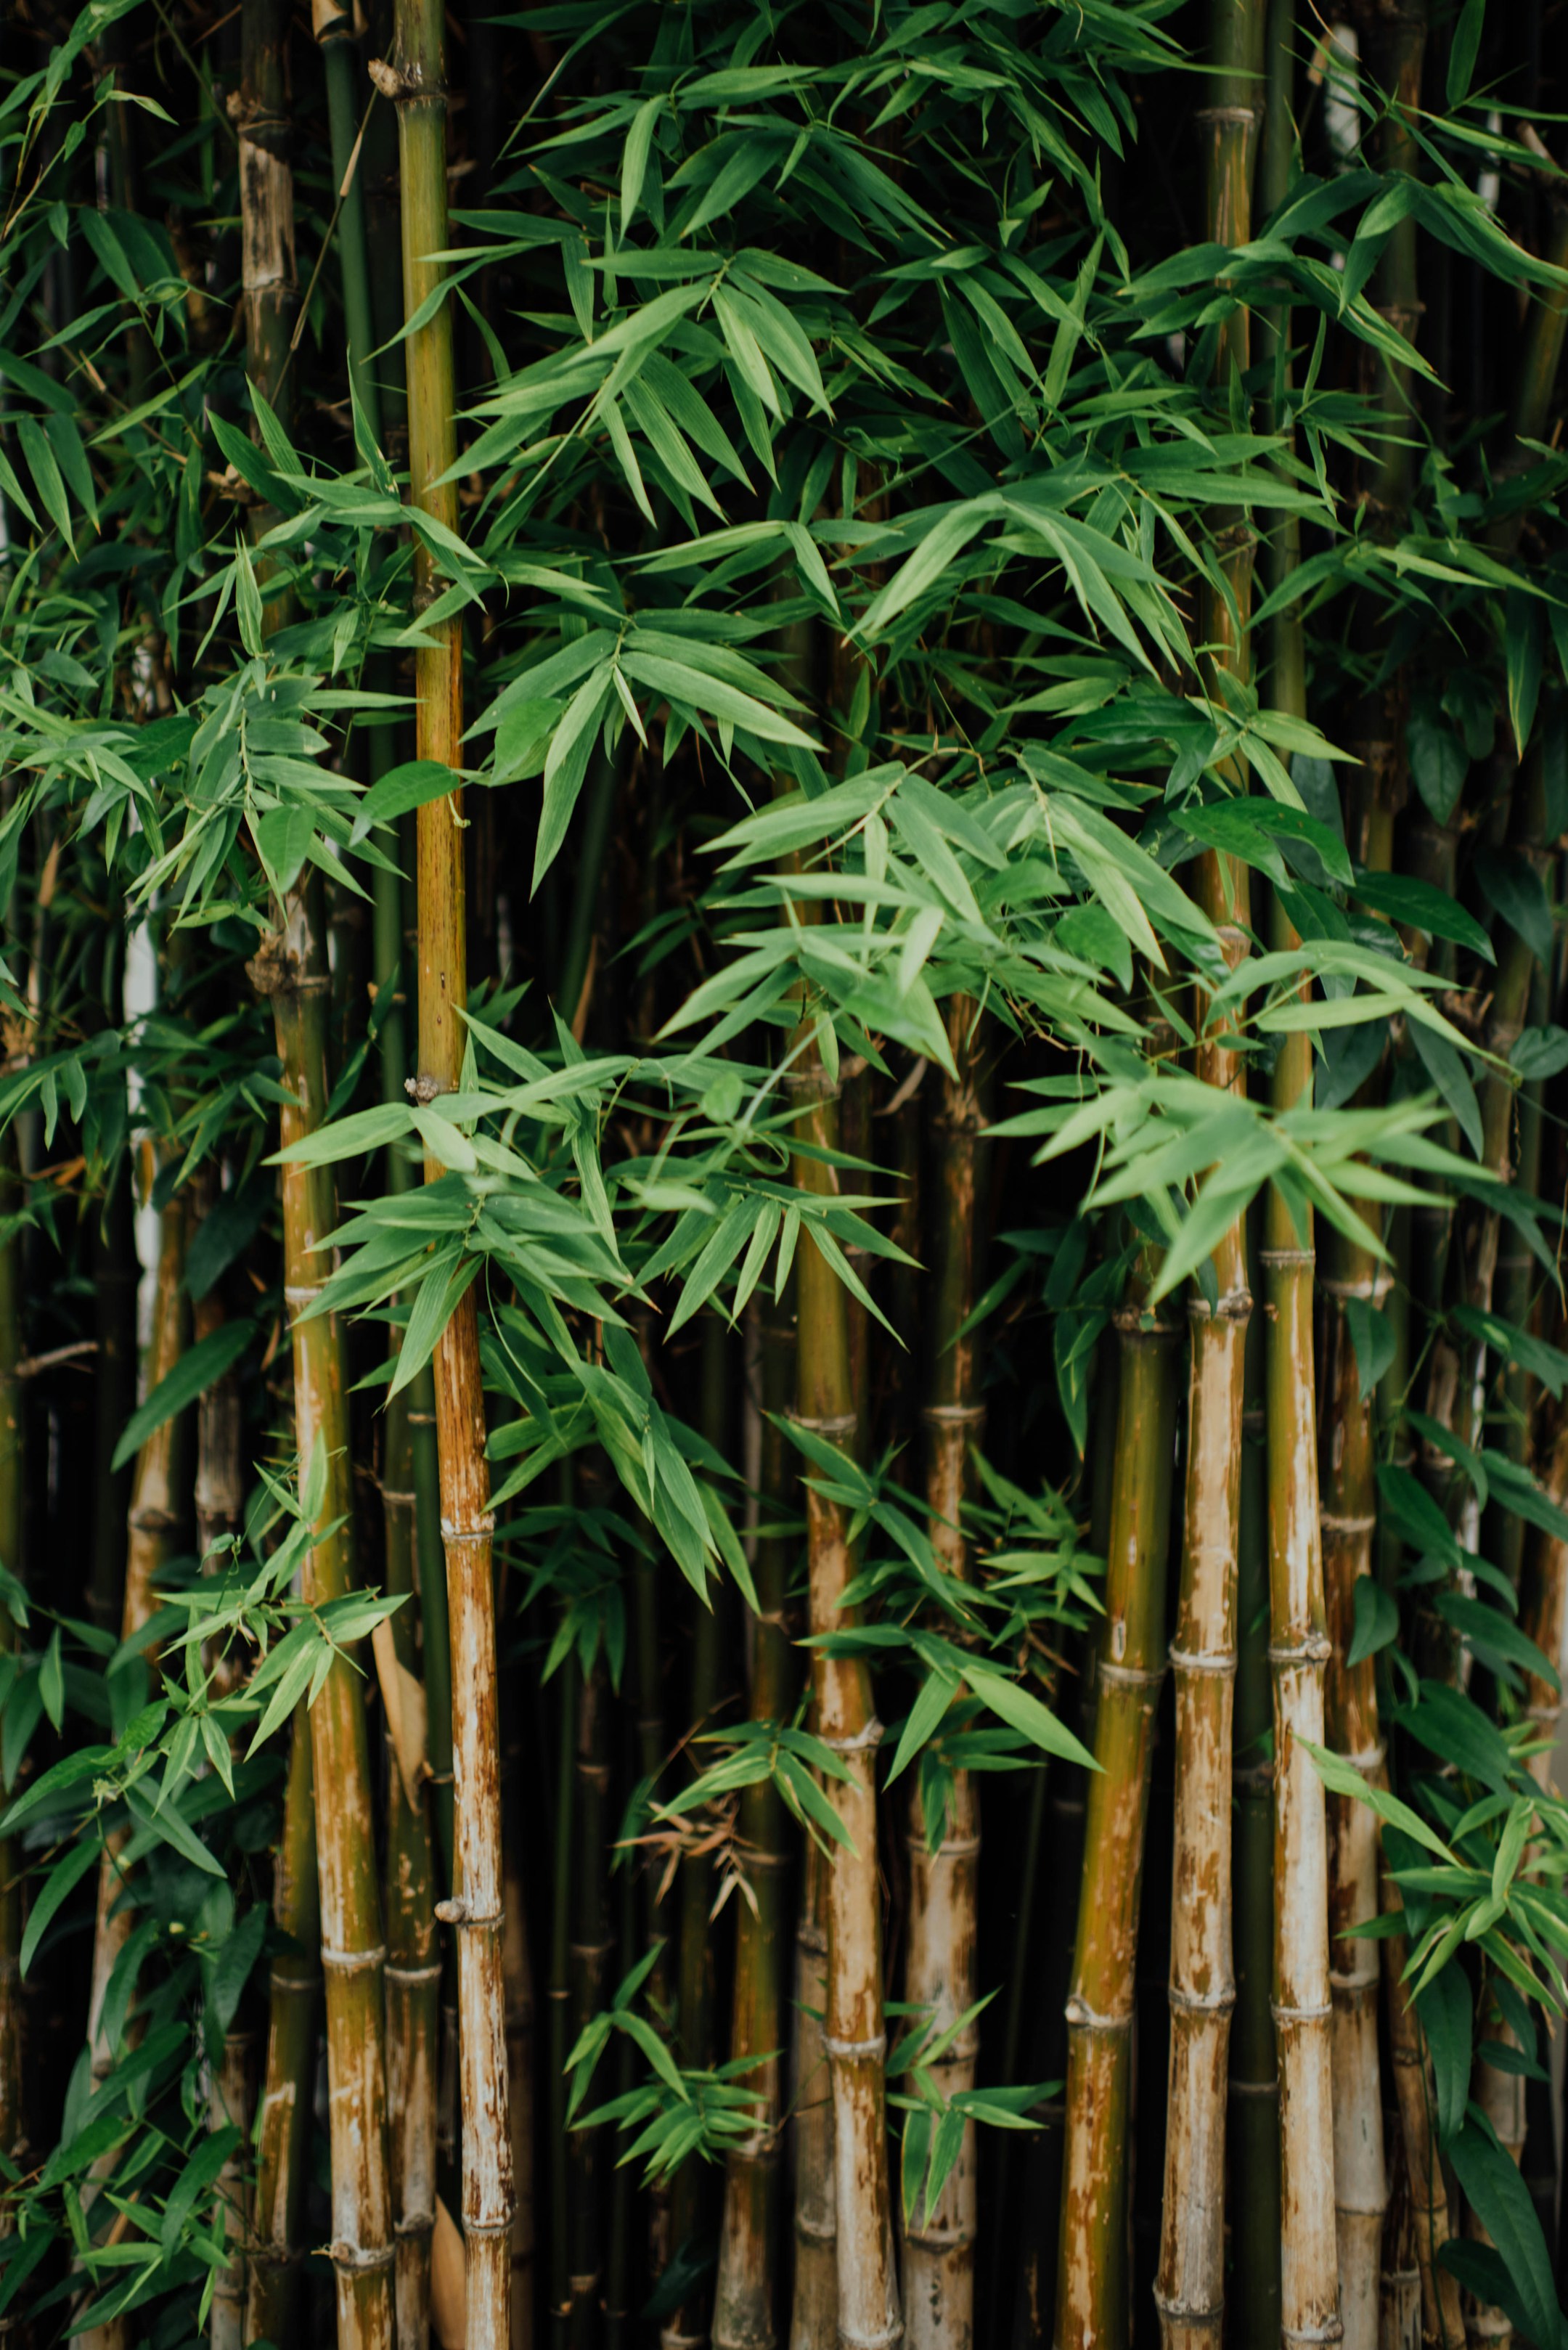 https://hindi.krishijagran.com/ampstories/bamboo-leaves-health-benefits-best-ways-to-use-bamboo-leaf-in-hindi.html